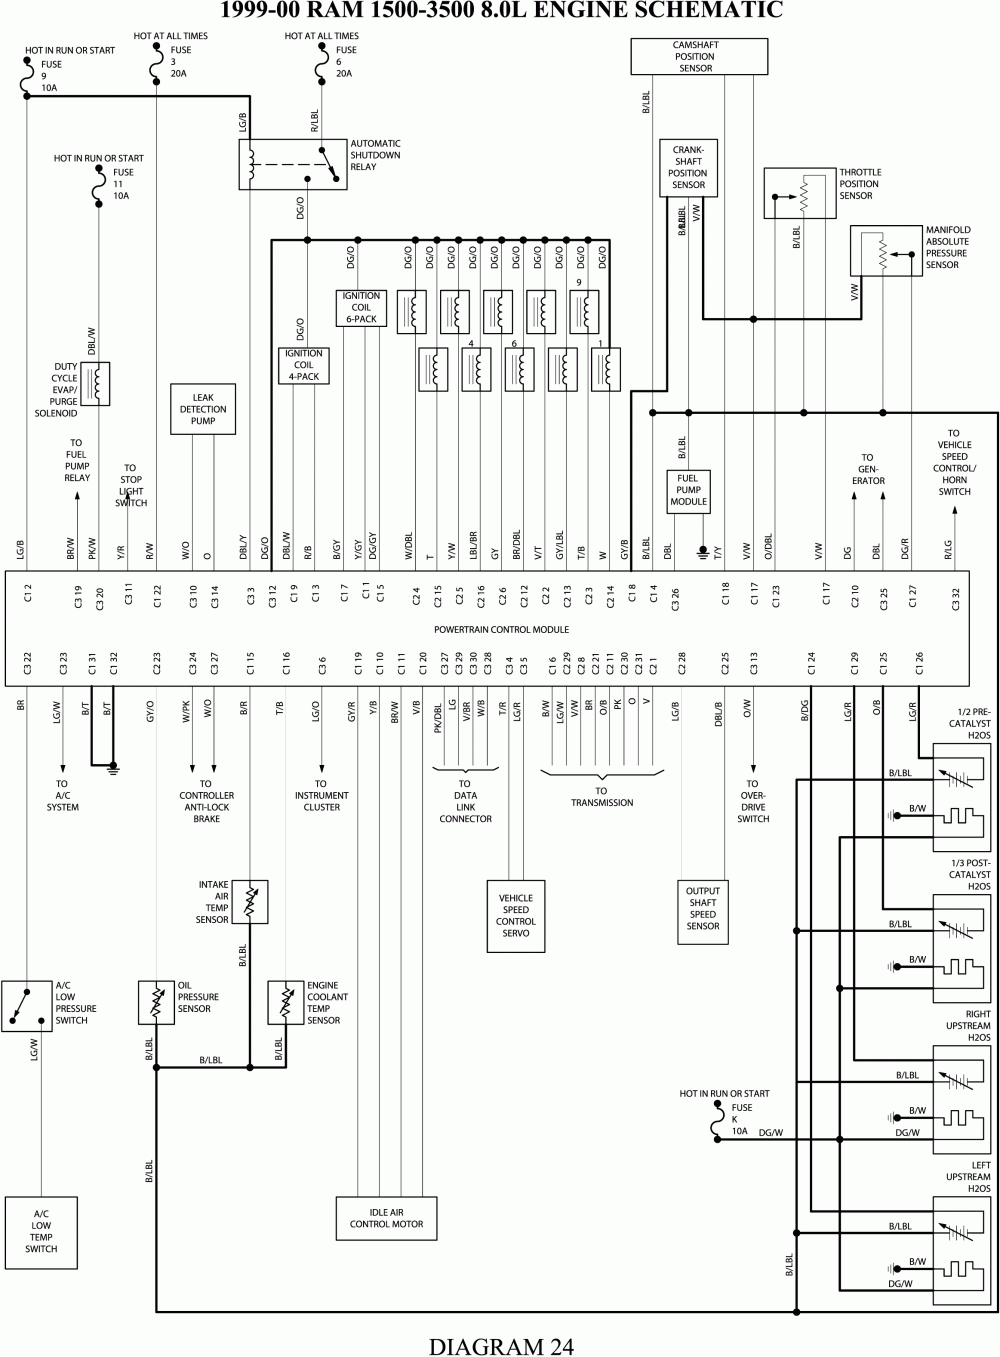 2014 Dodge Ram Trailer Wiring Diagram | Manual E-Books - 2014 Dodge Ram Wiring Diagram